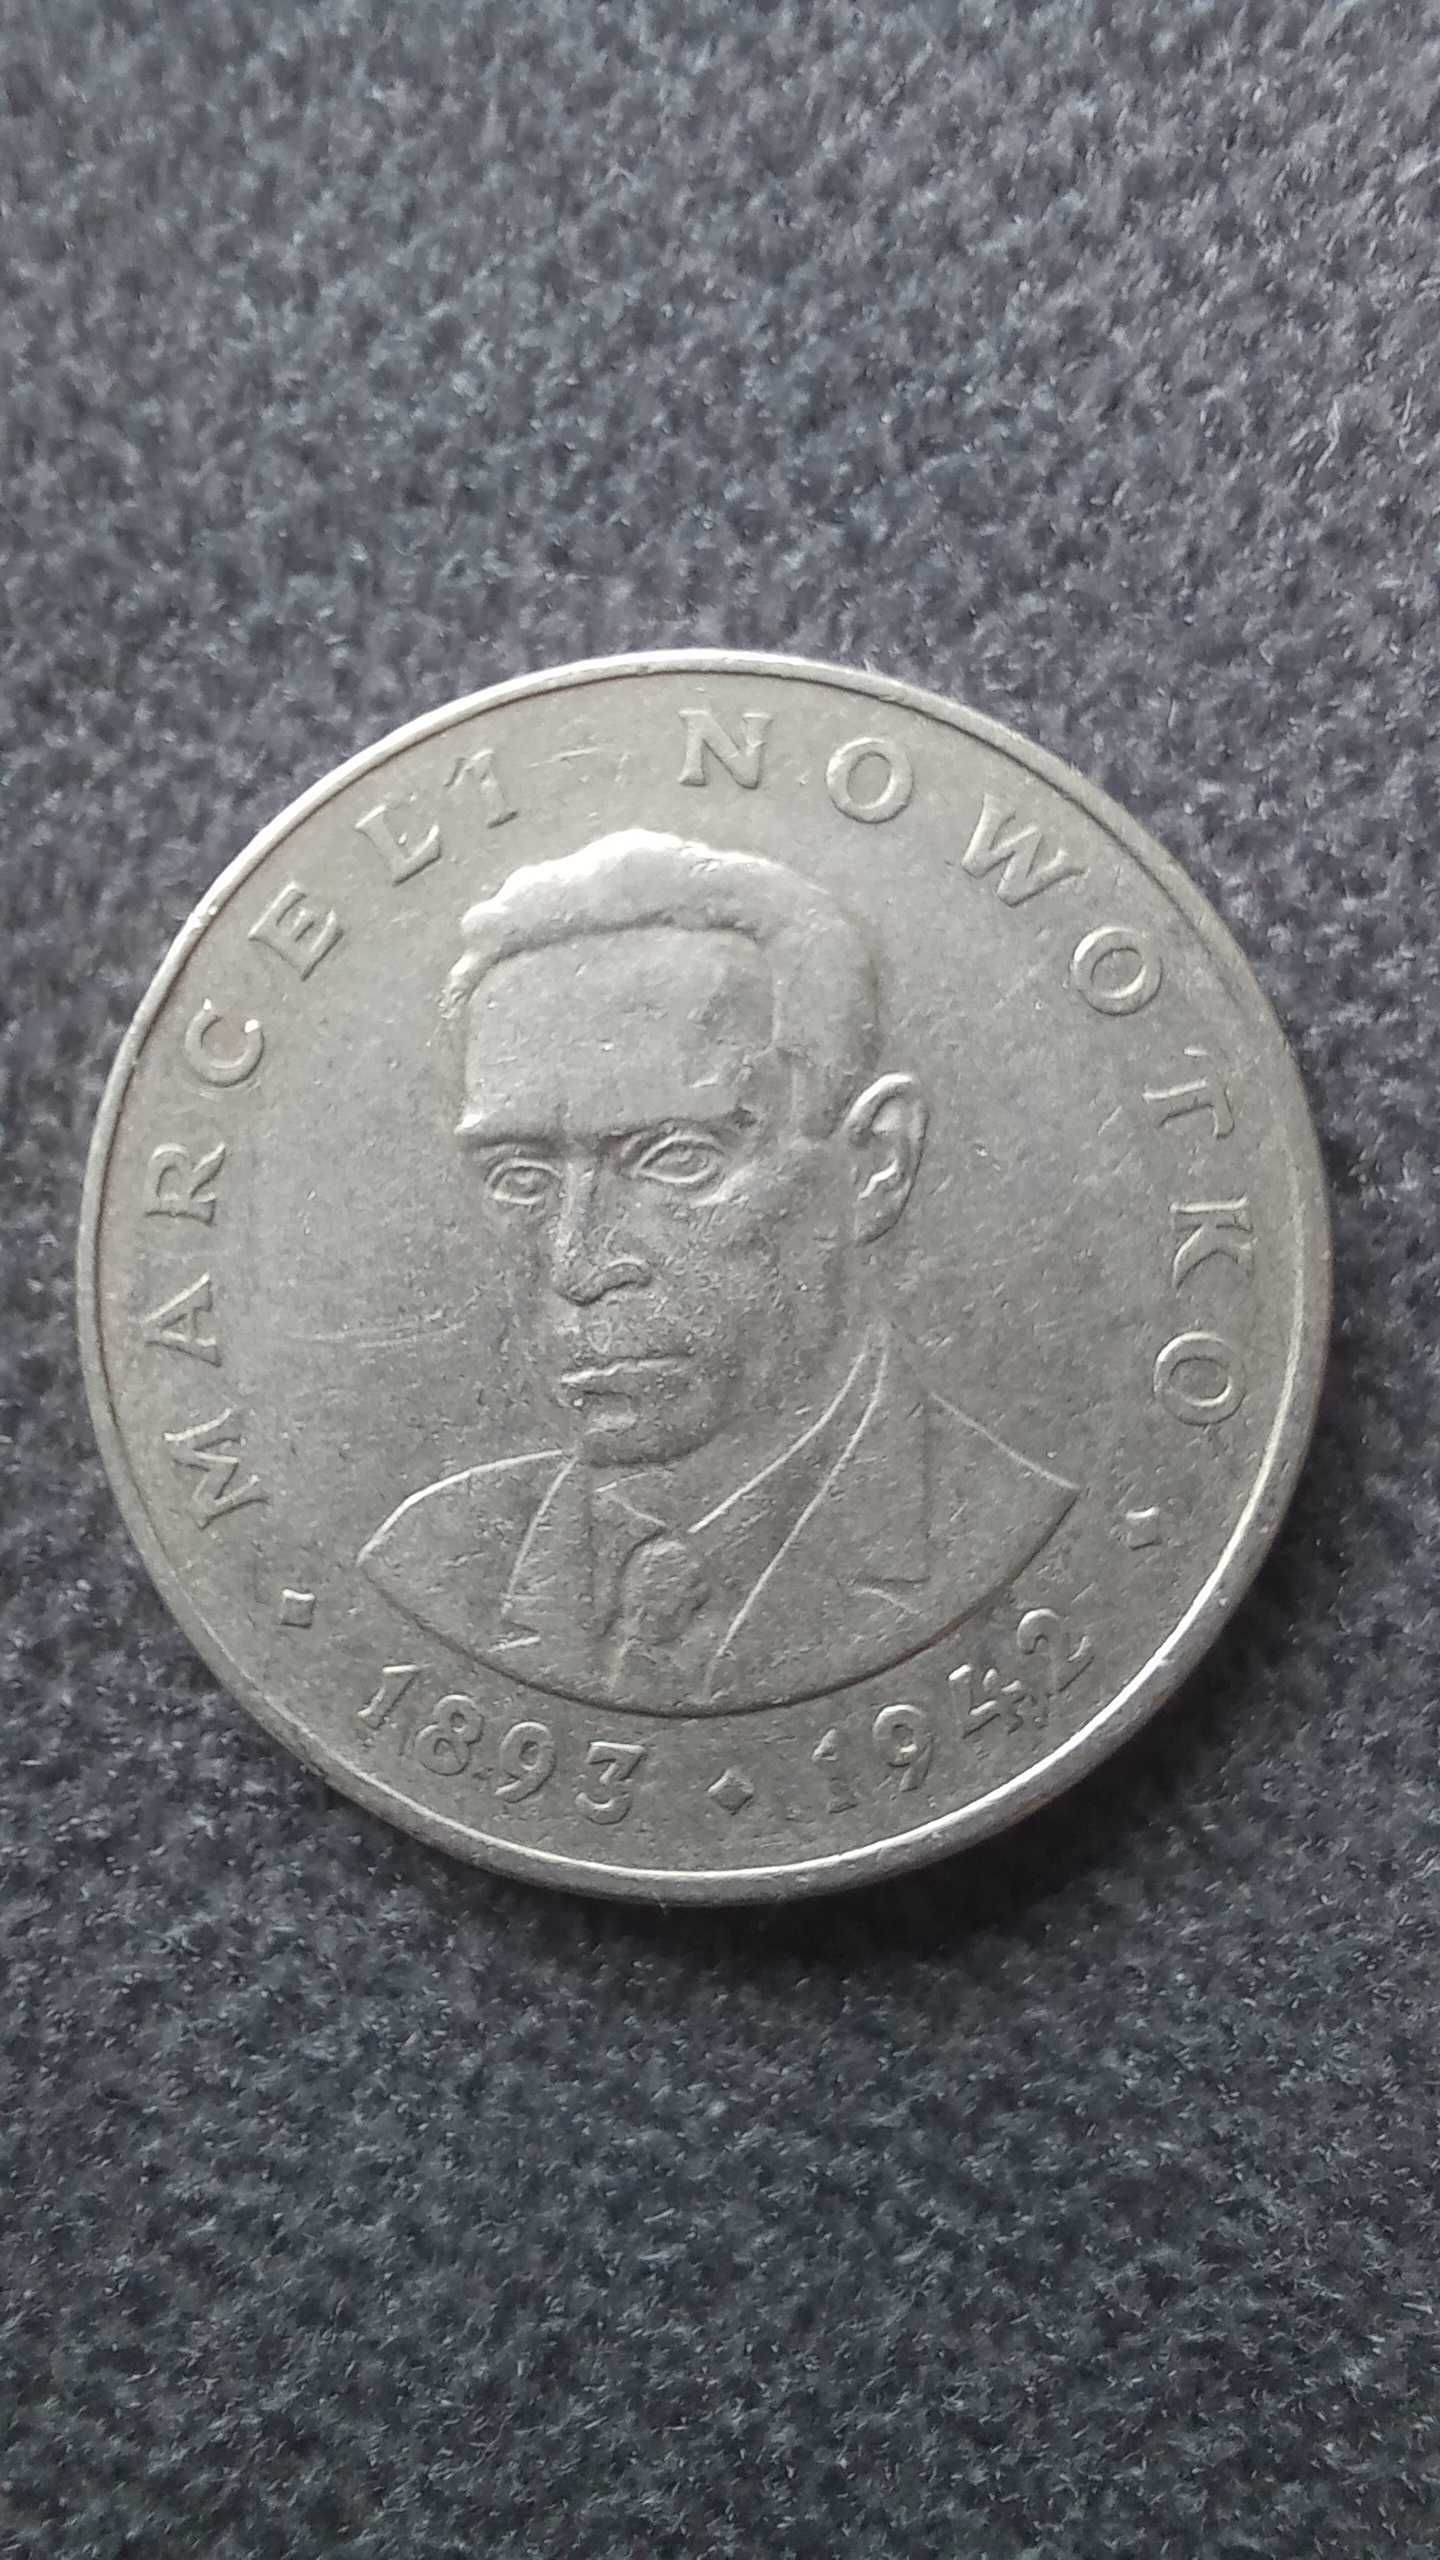 Moneta 20 zł Marceli Nowotko - 1976 rok